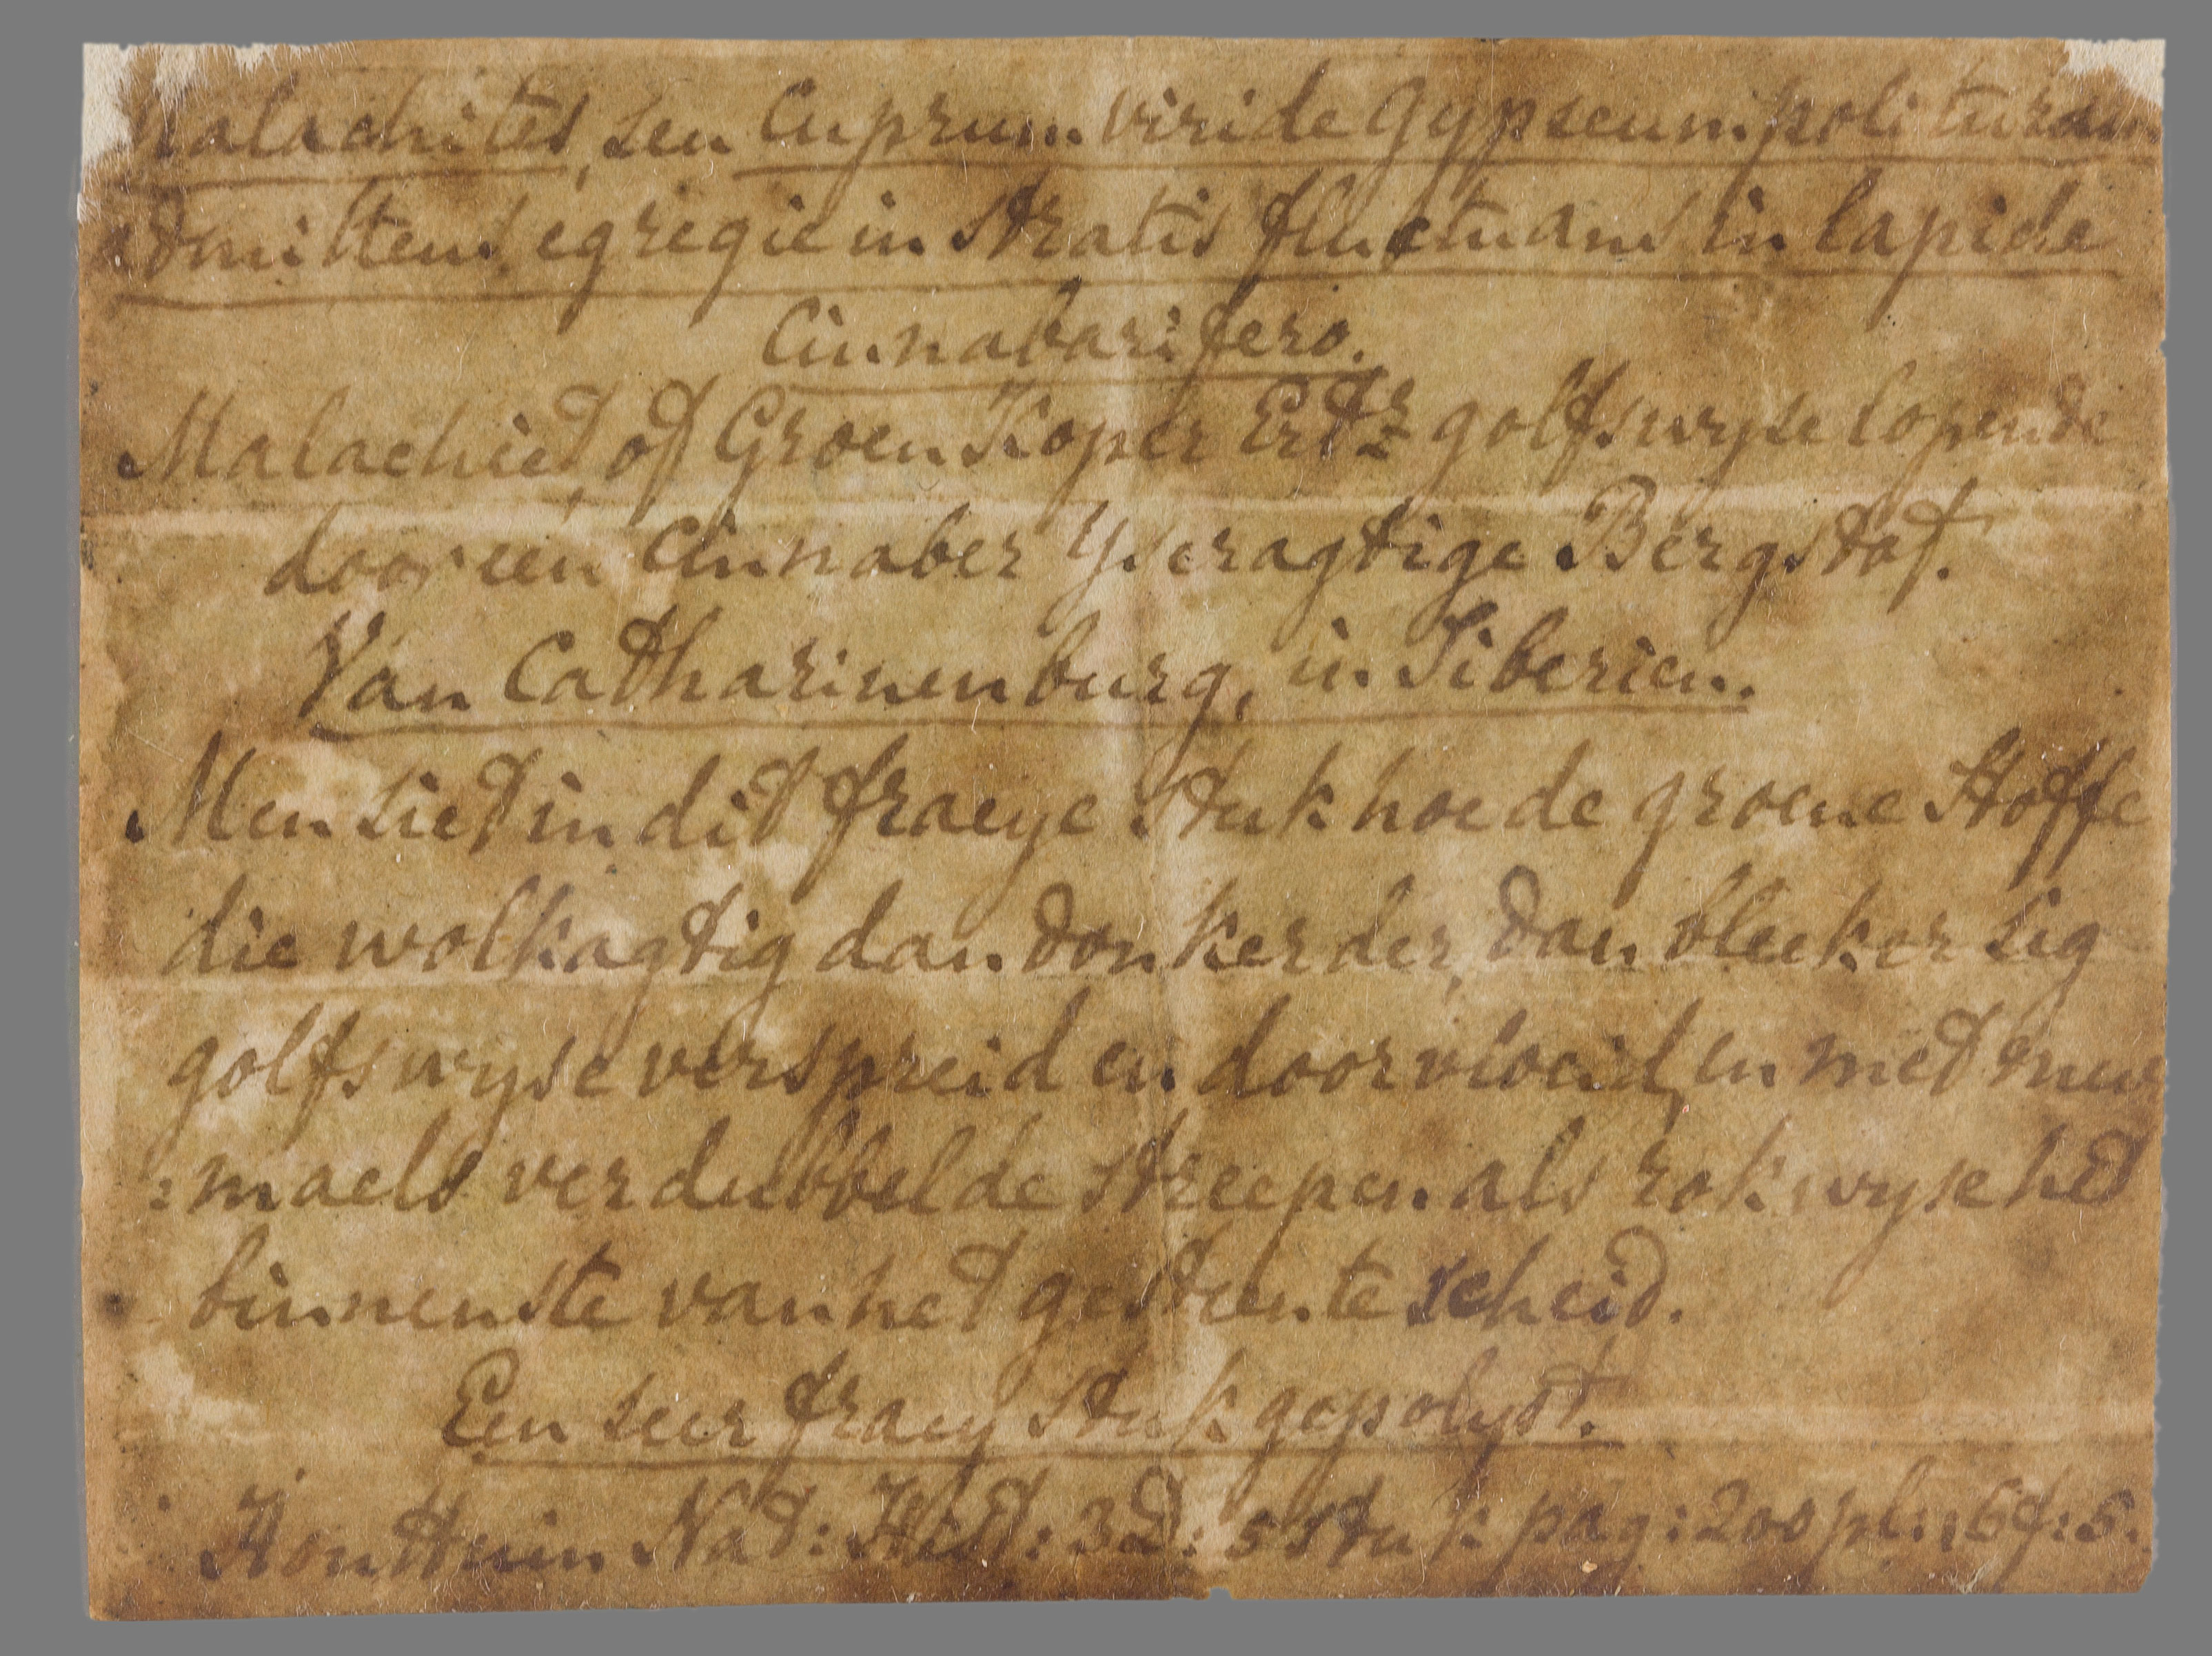 specimen label in the handwriting of J. le Francq van Berkhey (1729-1812)